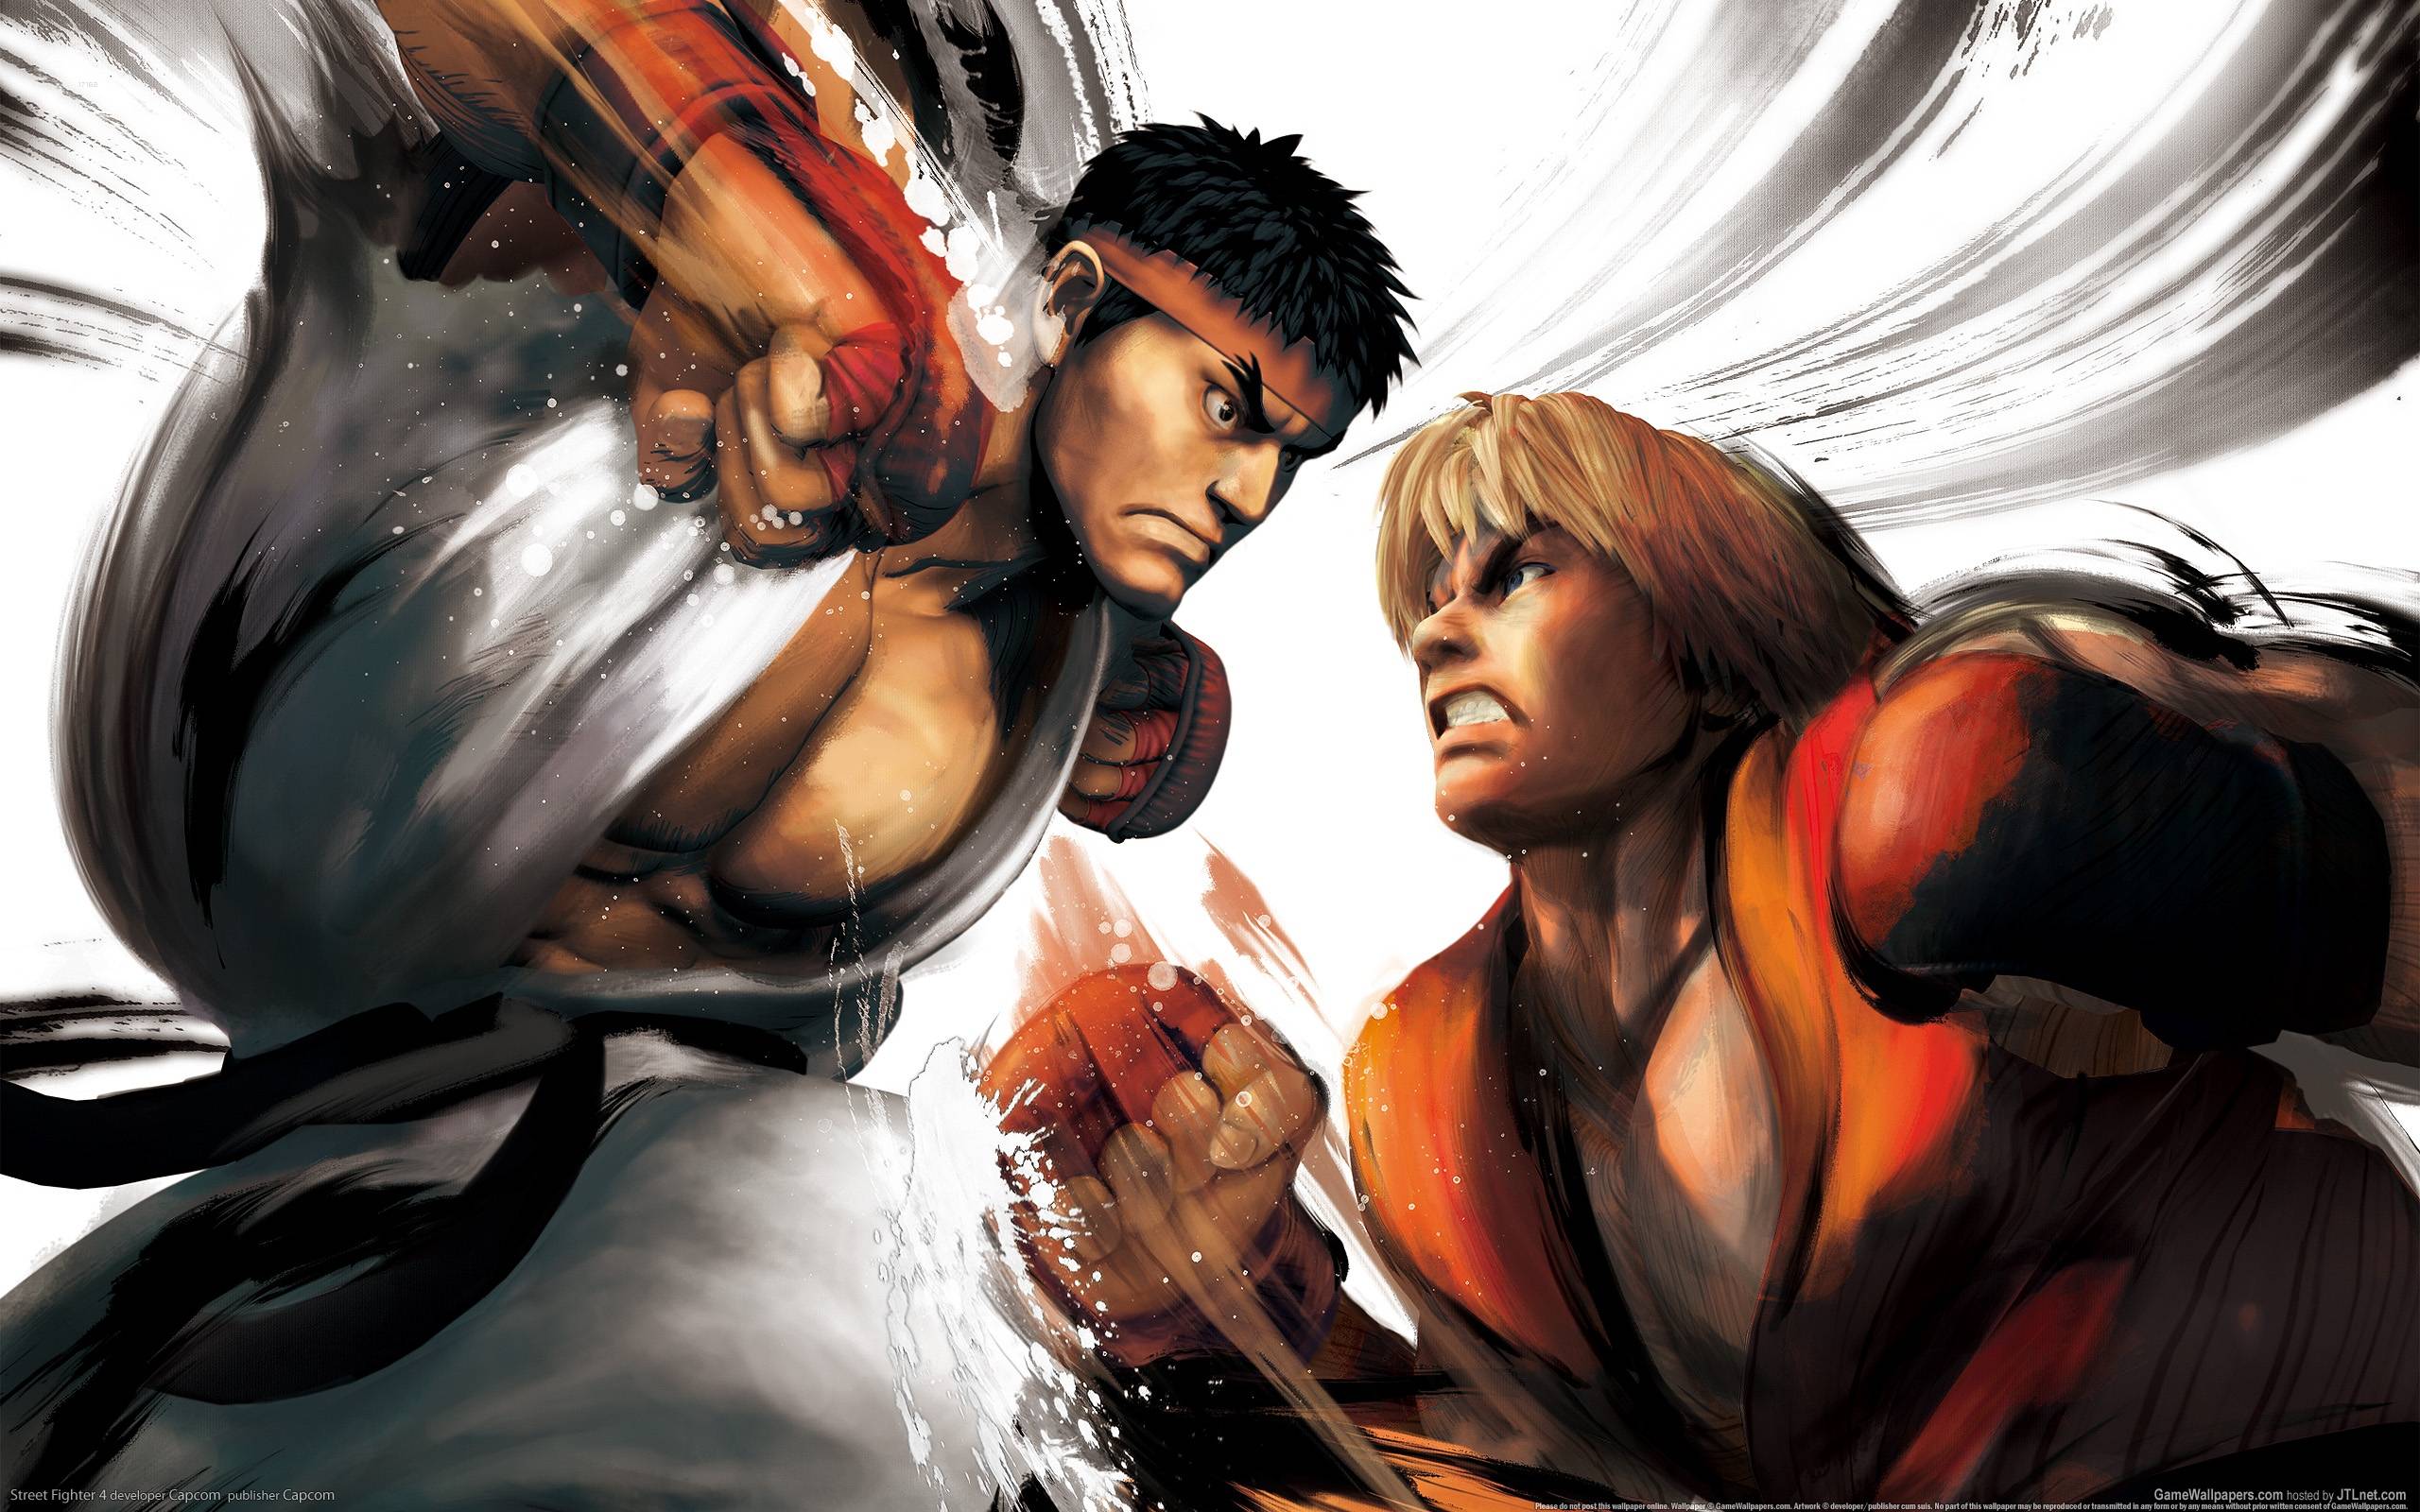 Street Fighter 4 wallpaper. Street Fighter 4 background